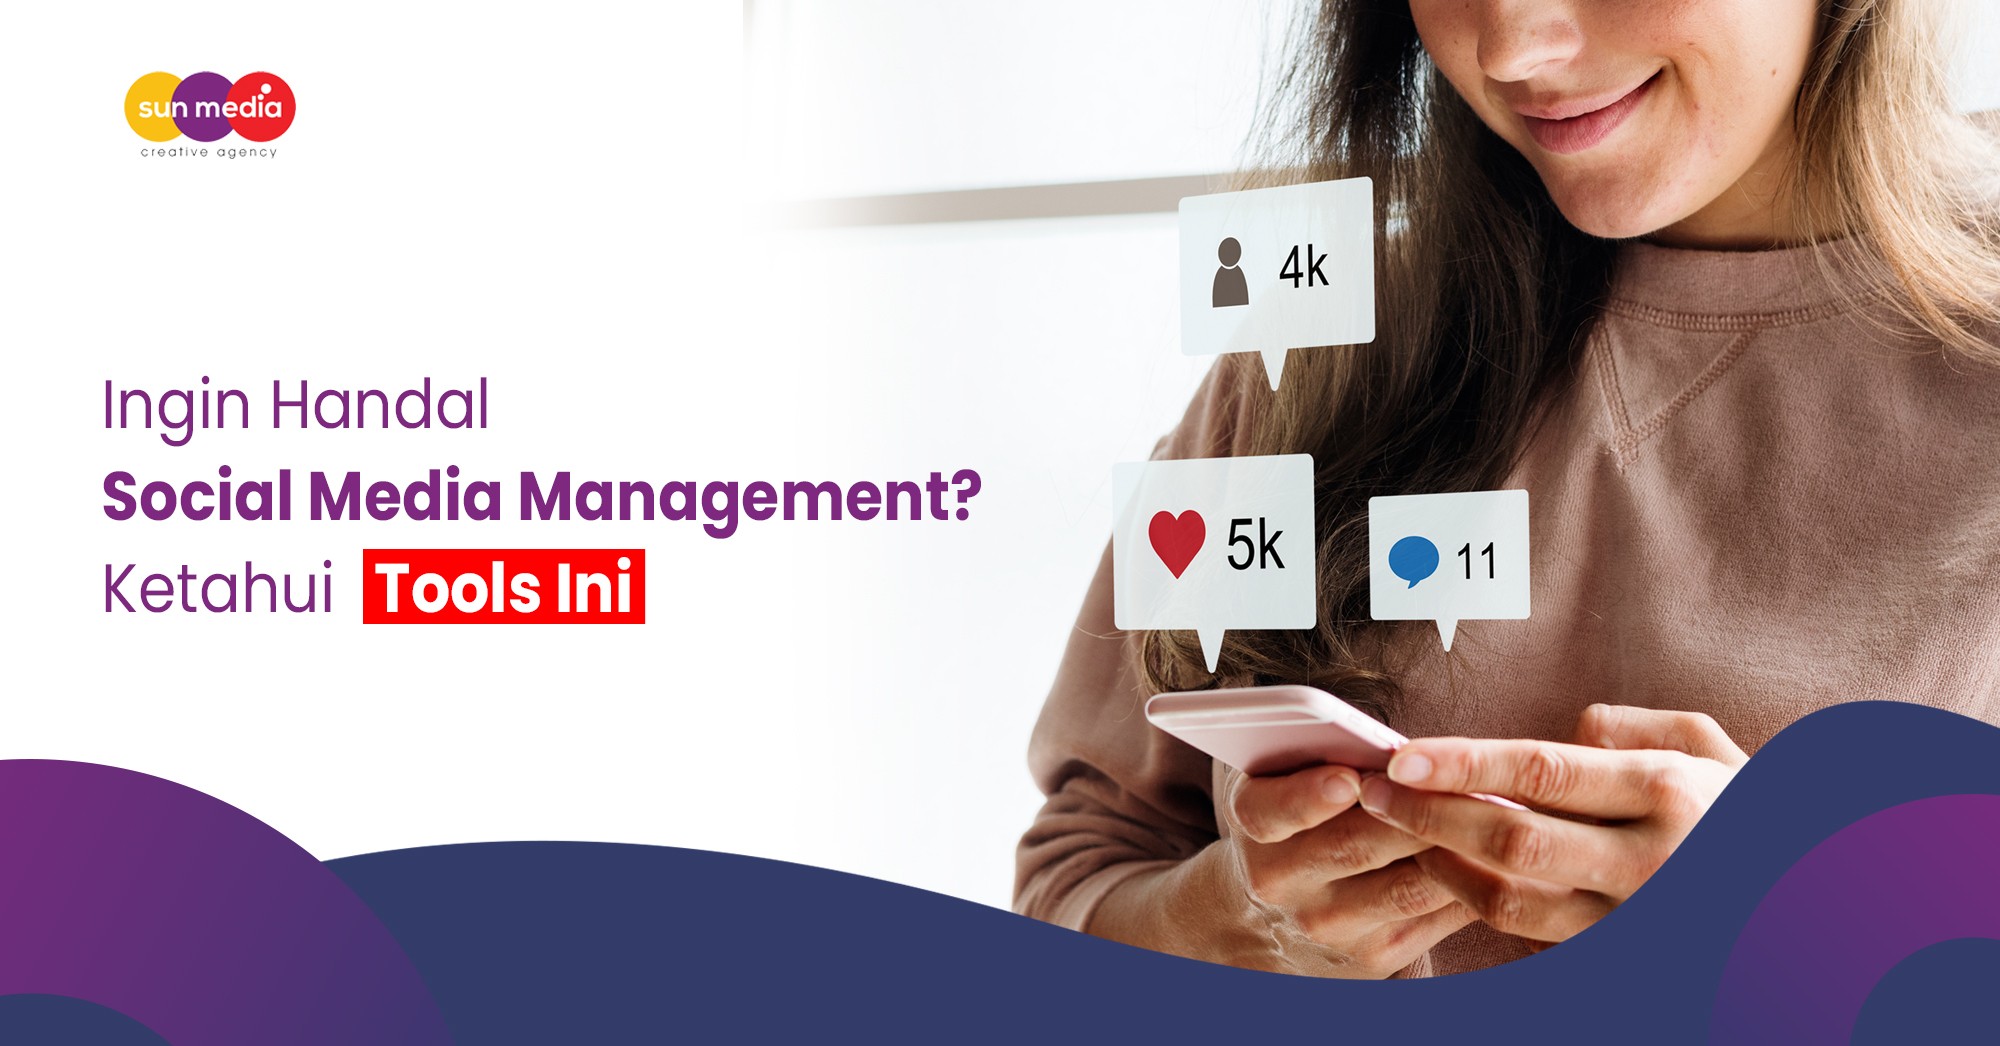 Best Social Media Management Tools by Sun Media Digital Marketing Agency in Bali - Best Bali SEO Services - Best Bali SMM Services